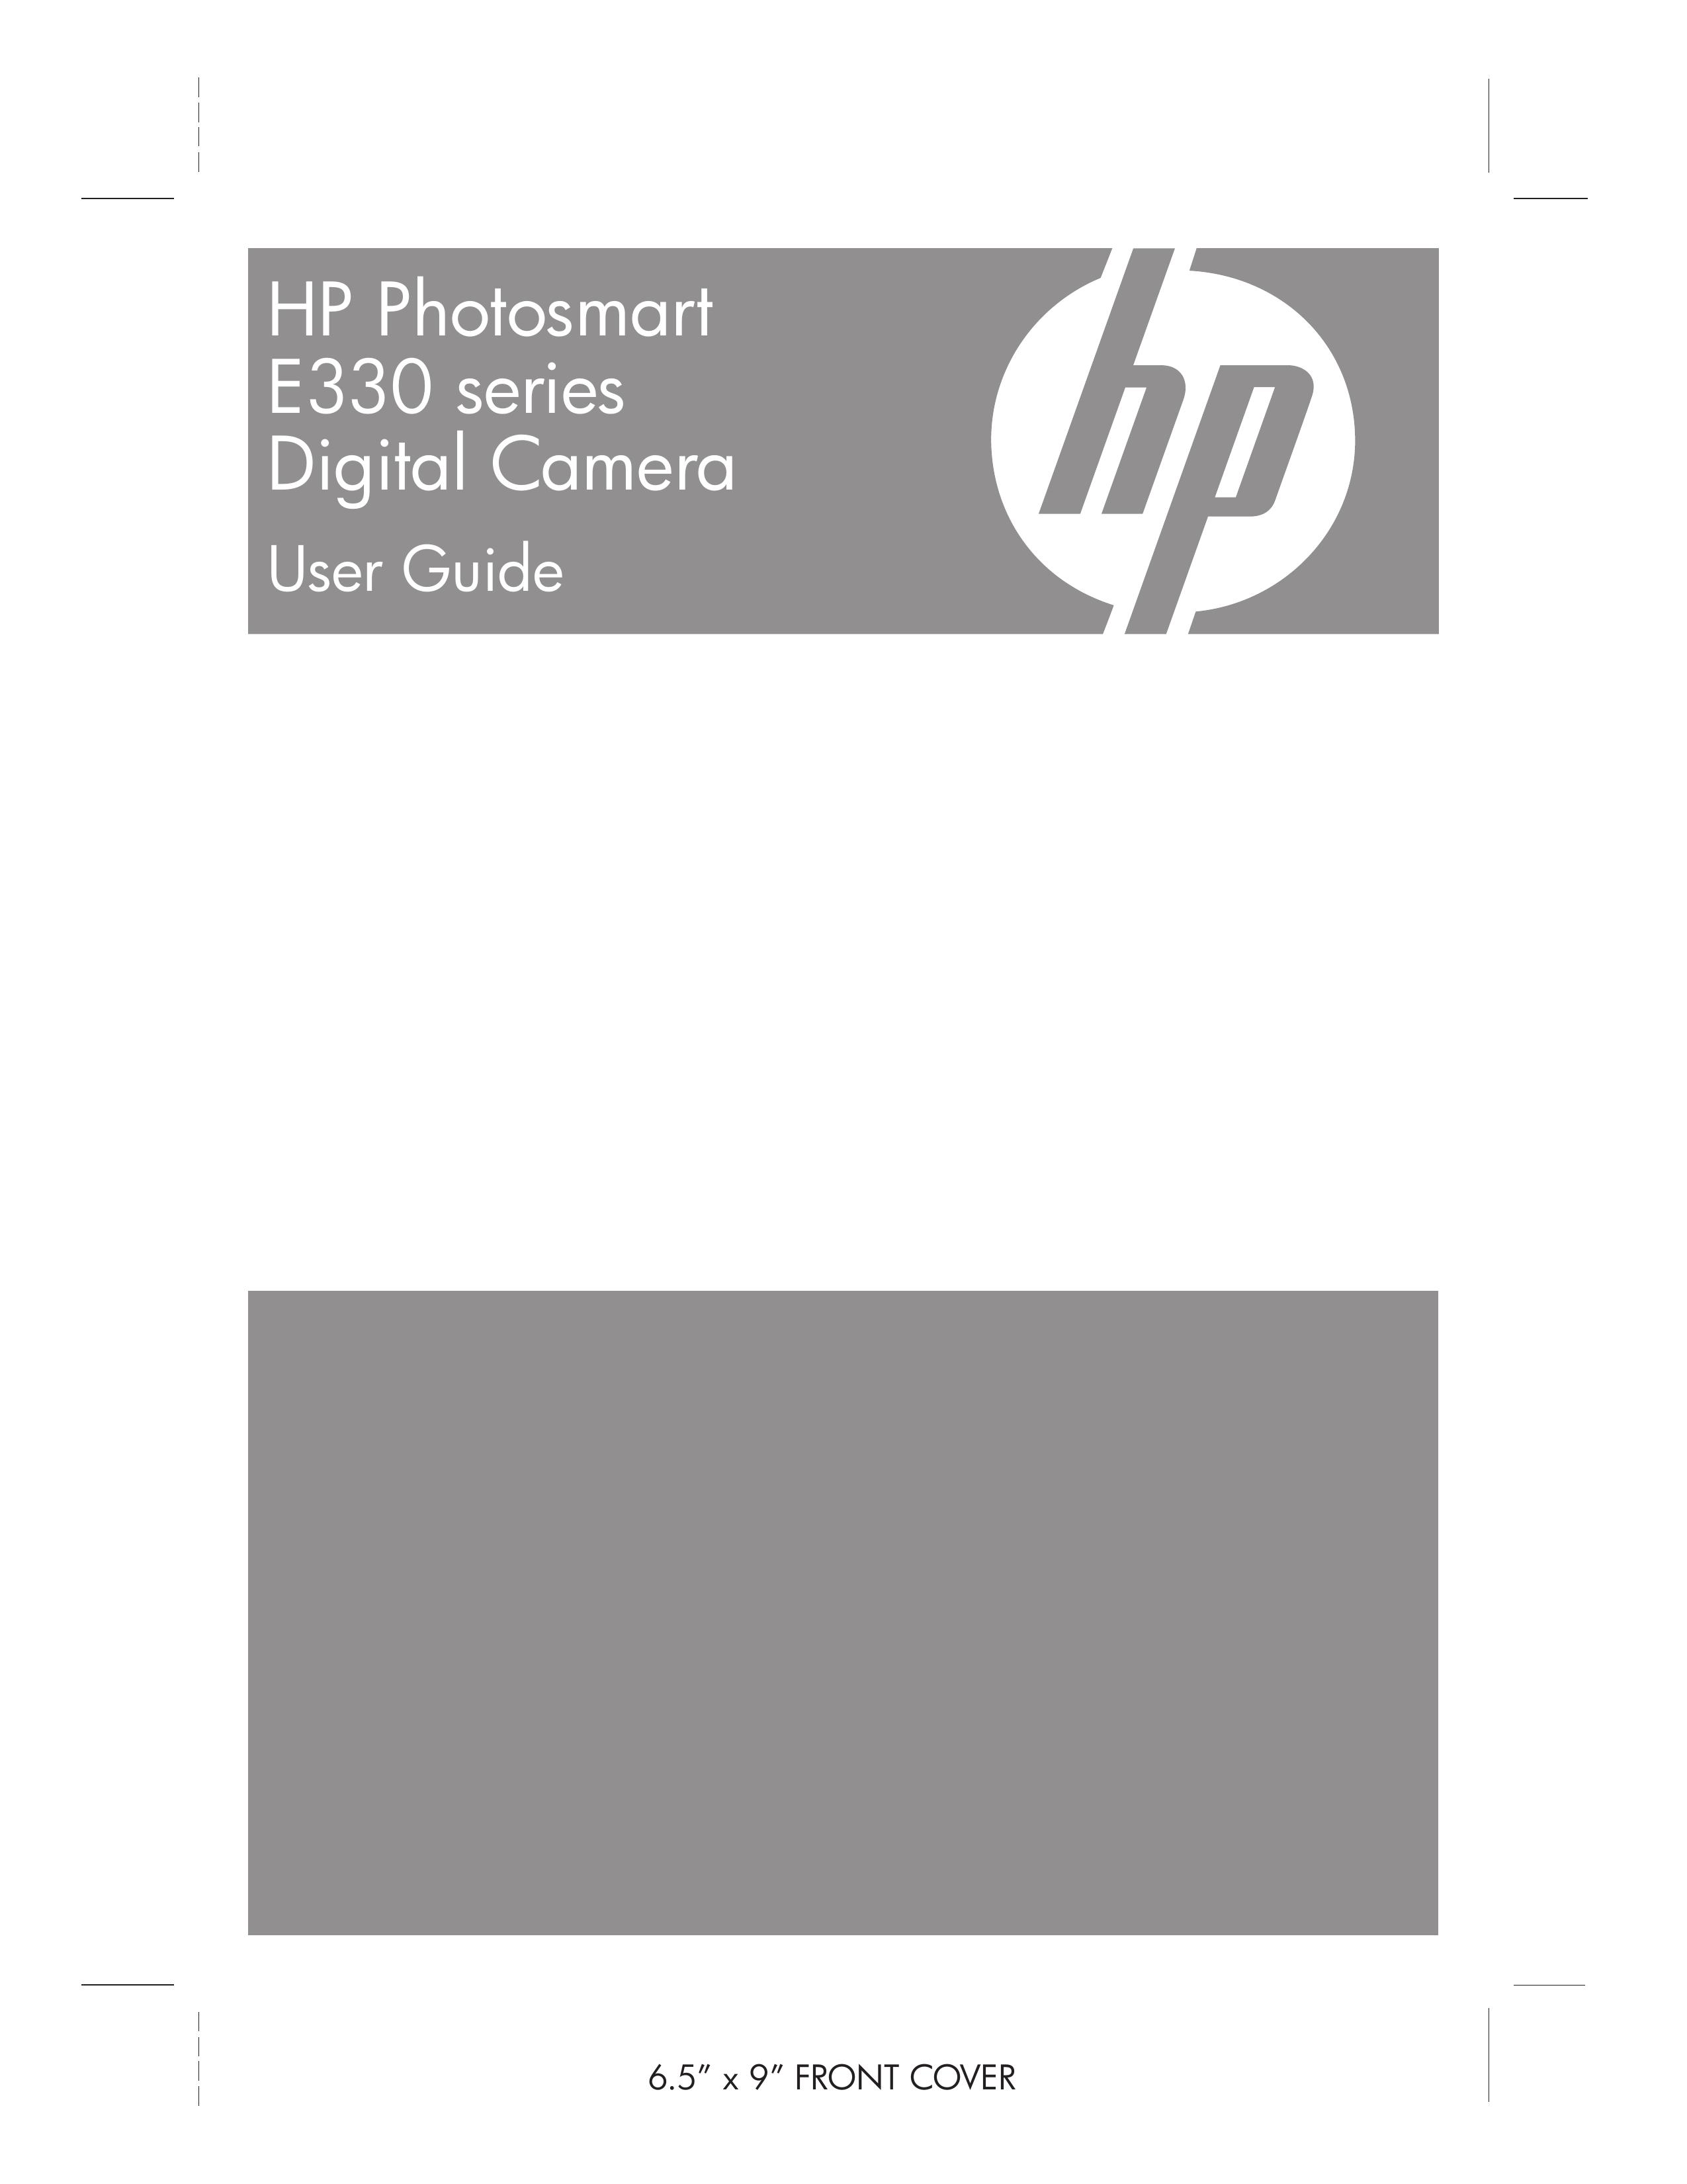 HP (Hewlett-Packard) E330 series Digital Camera User Manual